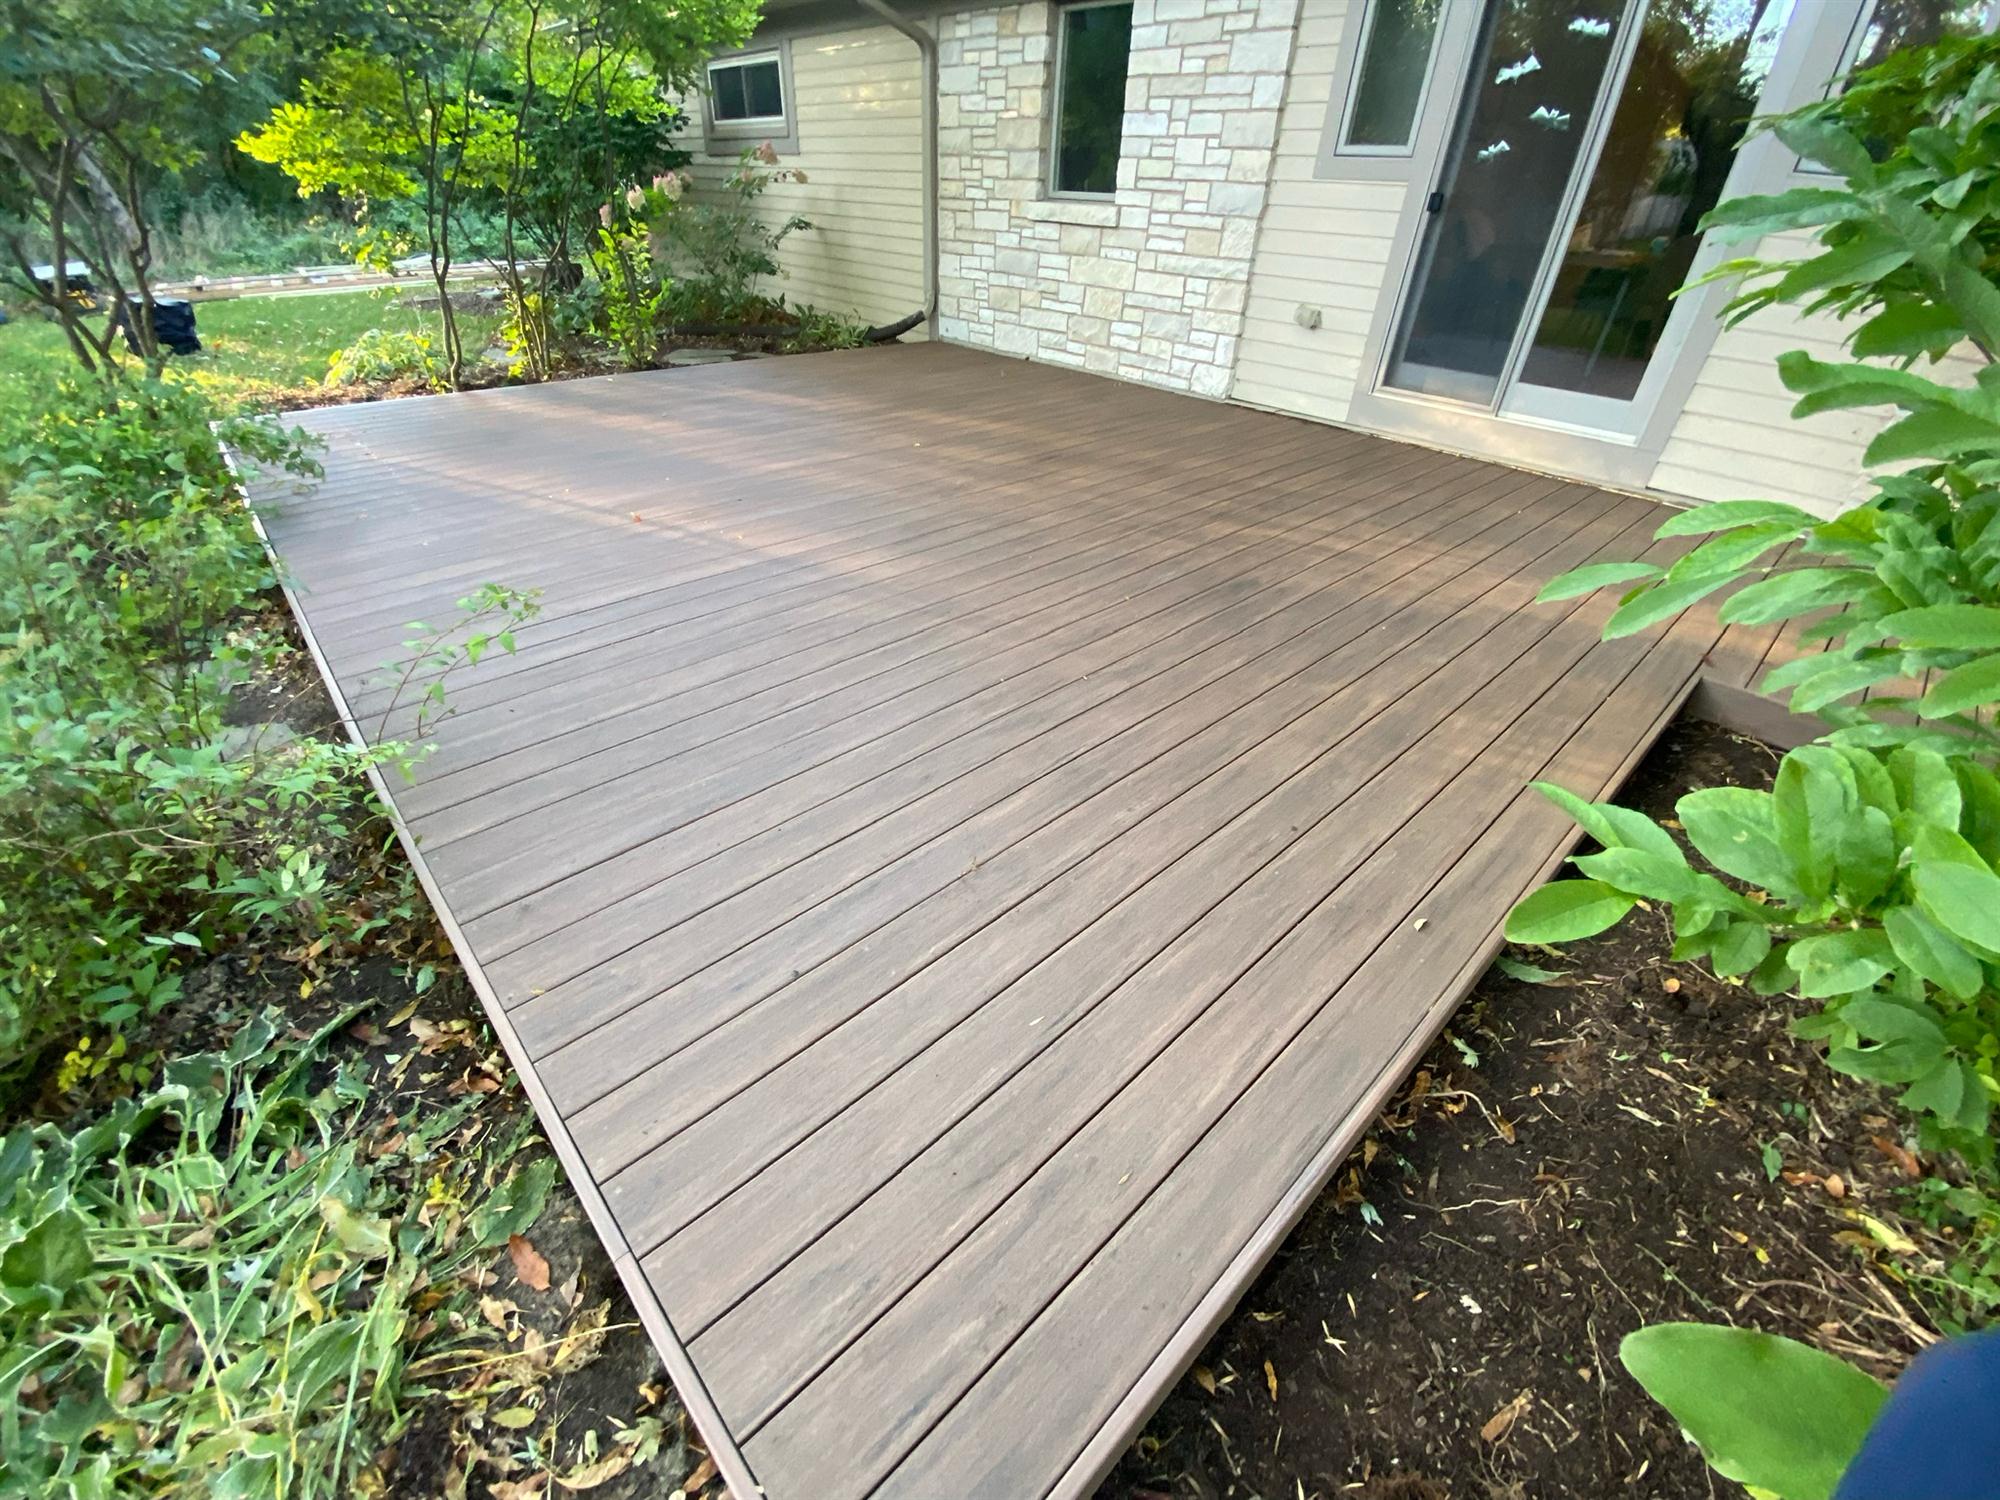 Ground-Level Wood deck in backyard